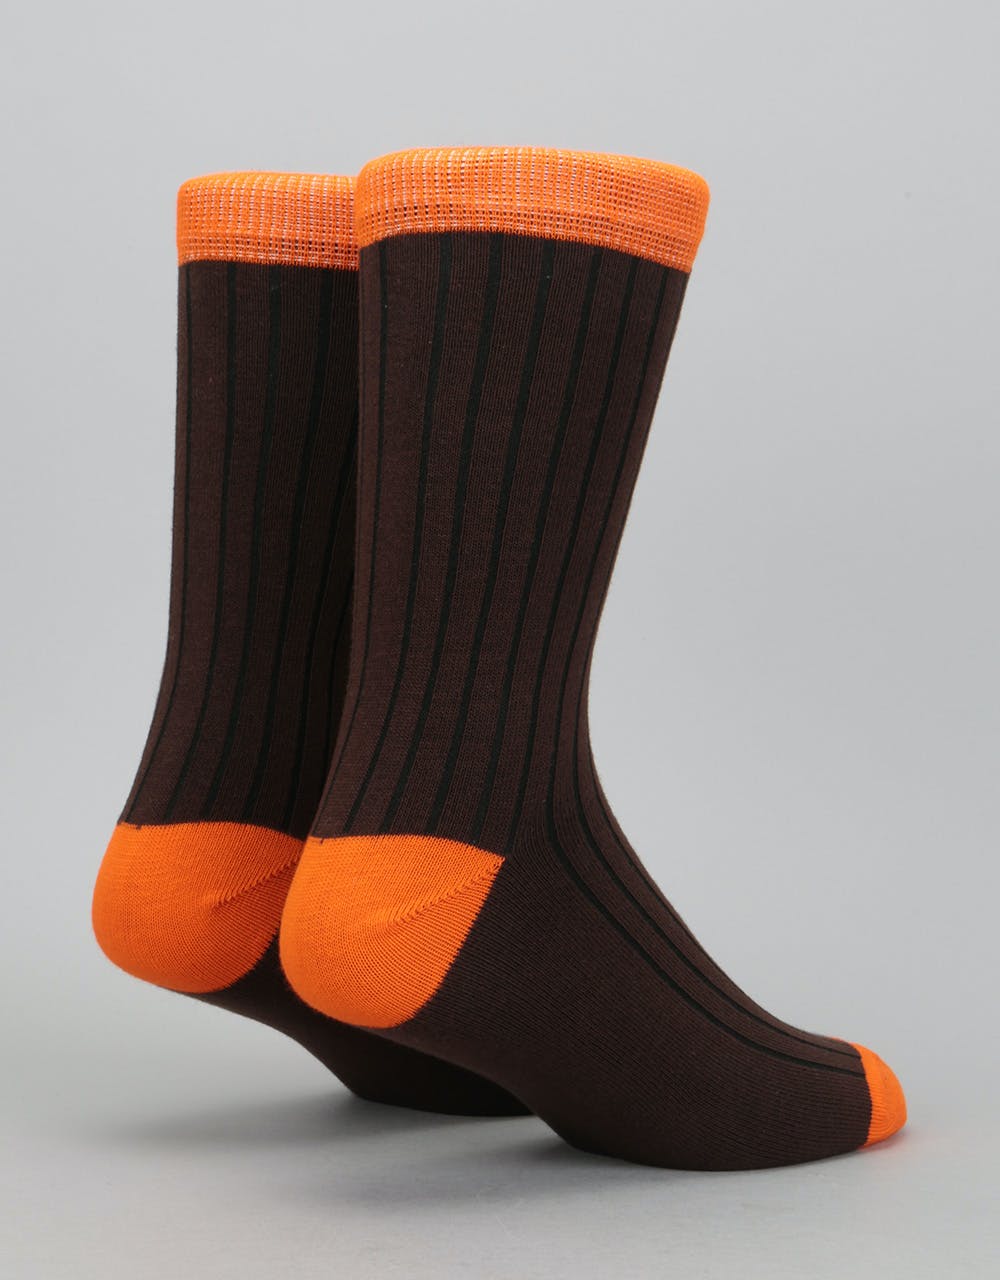 Route One Derby Socks - Brown/Orange